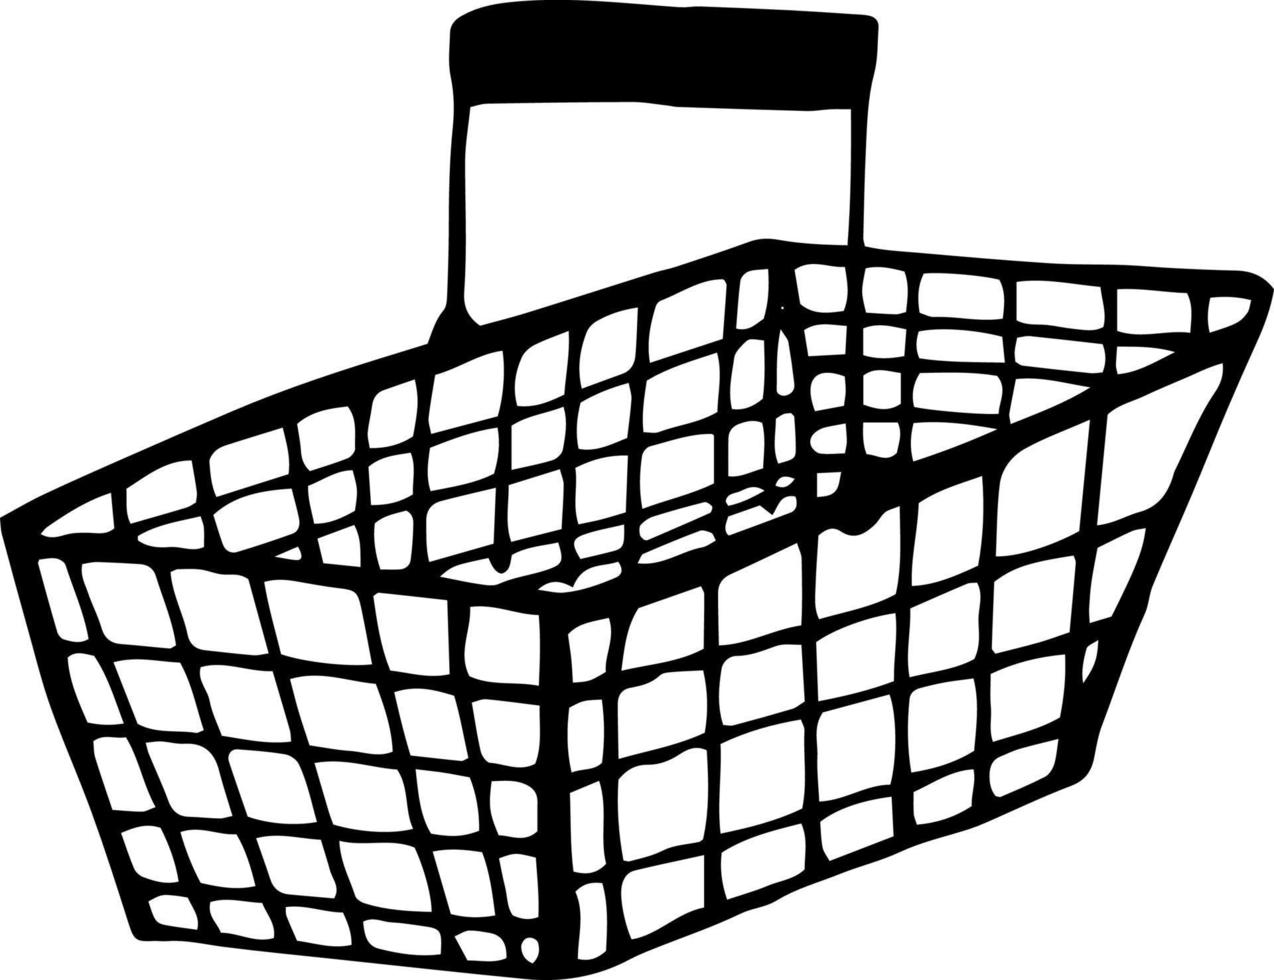 icono de la cesta de la compra. boceto estilo garabato dibujado a mano. minimalismo monocromo. tienda vector